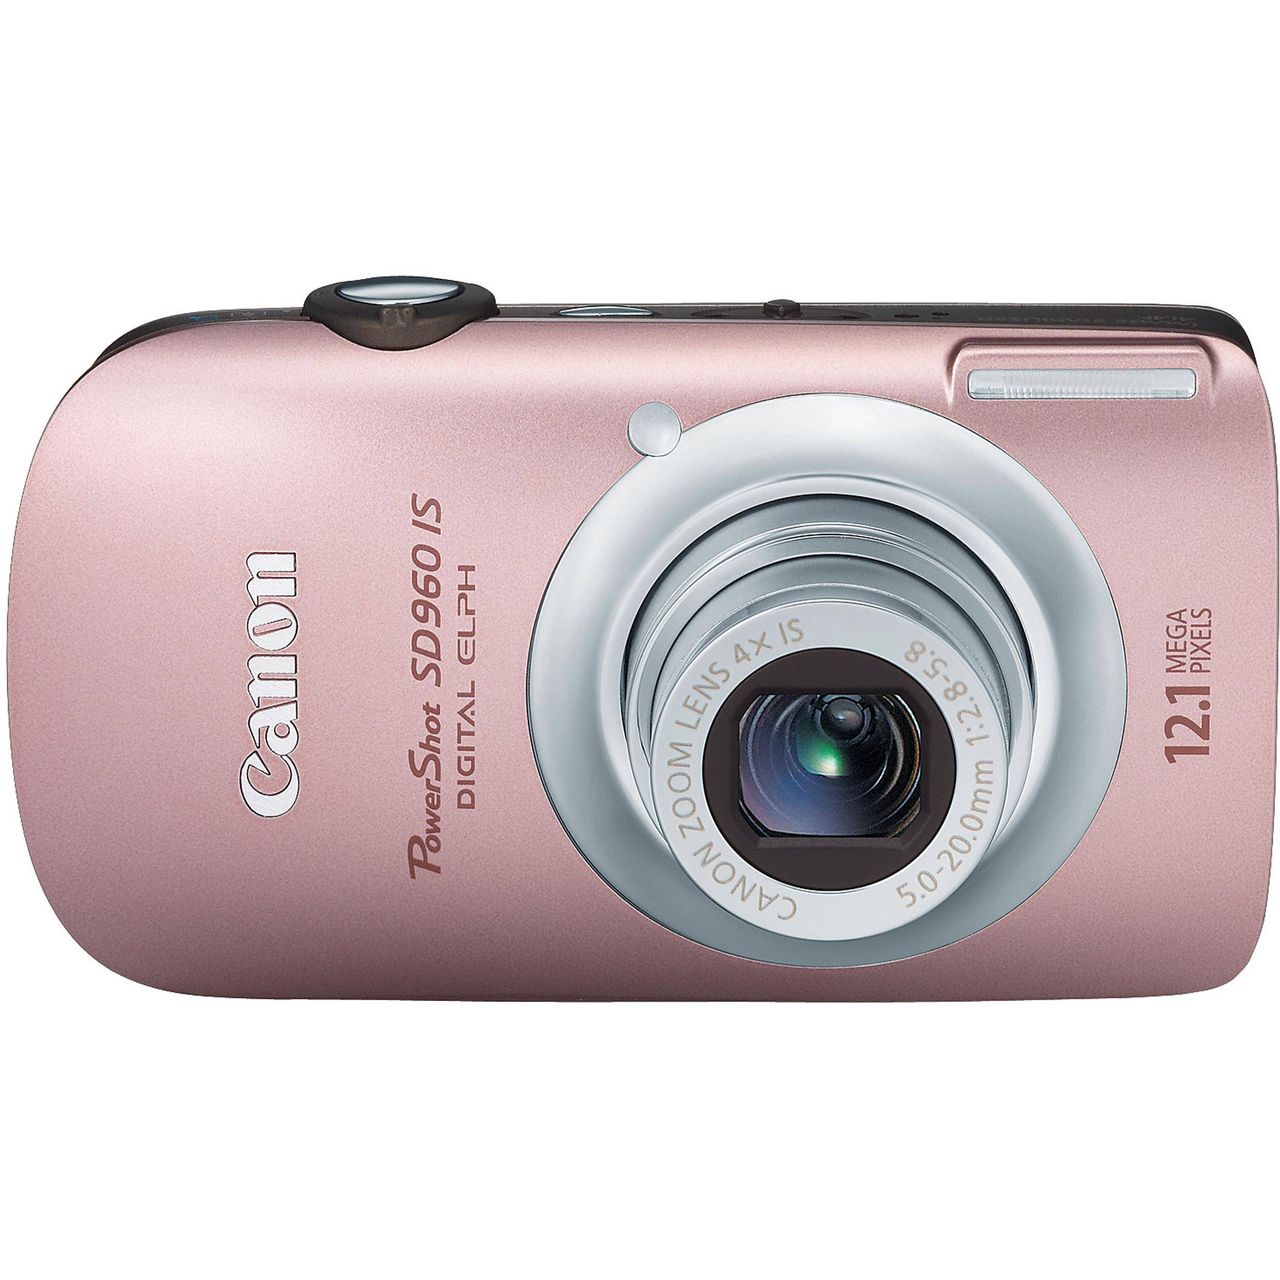 Canon PowerShot SD960 IS (Digital IXUS 110 IS)